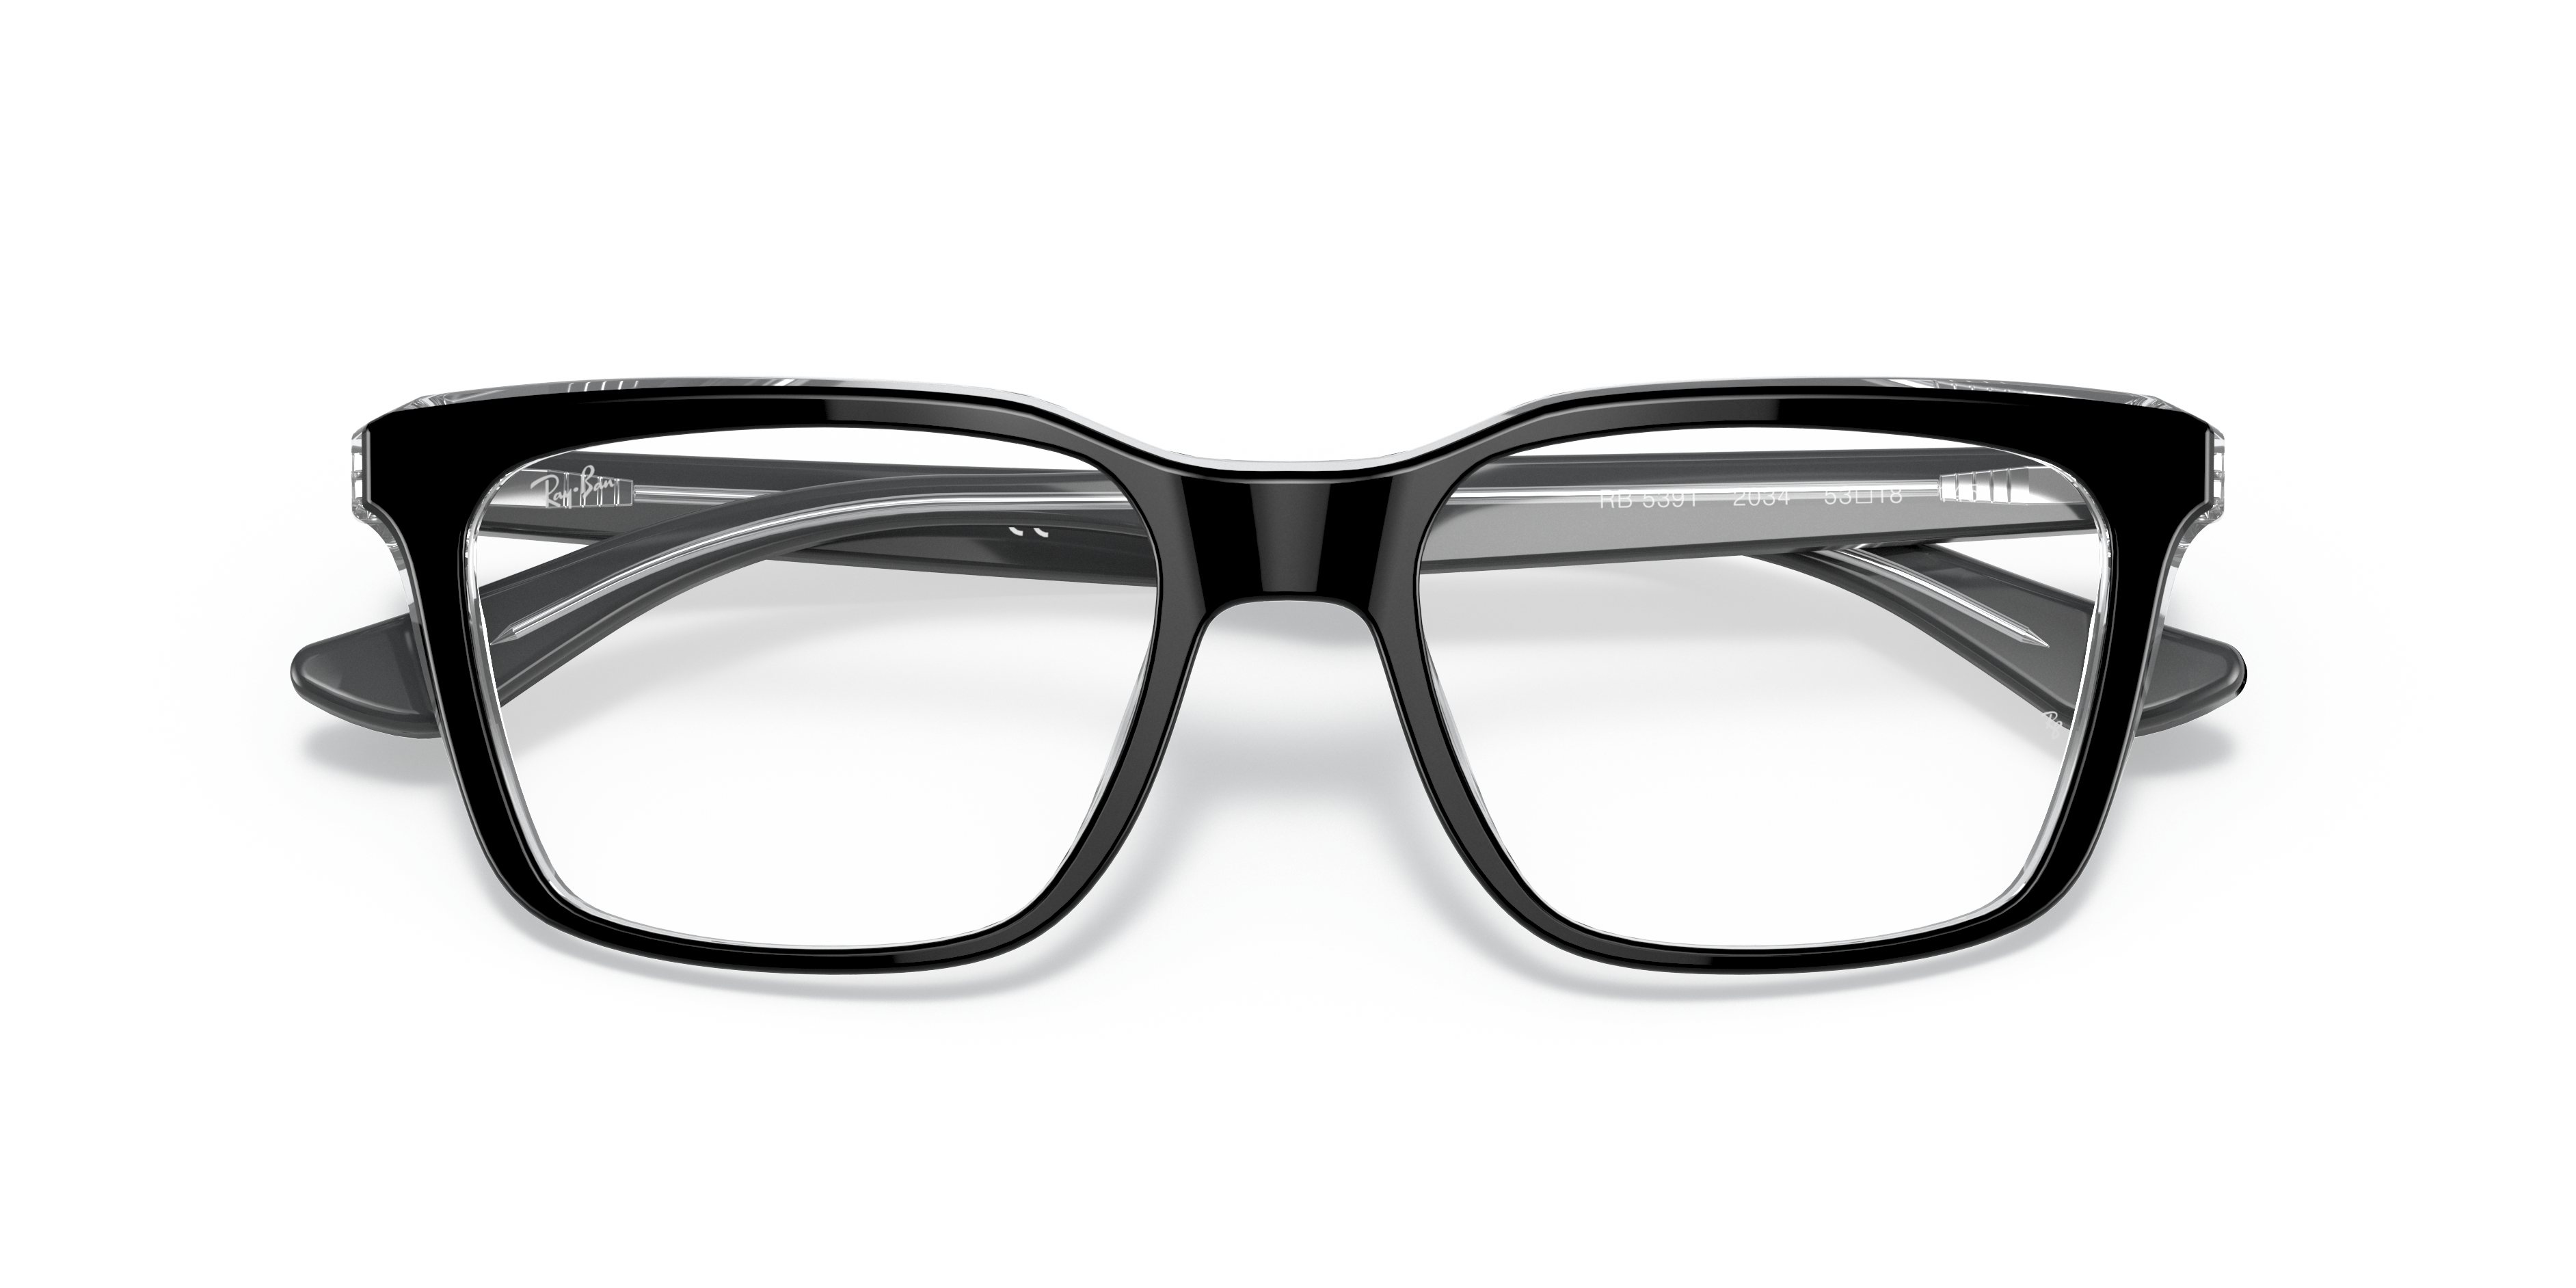 Rb5391 Optics Eyeglasses with Black On Transparent Frame | Ray-Ban®